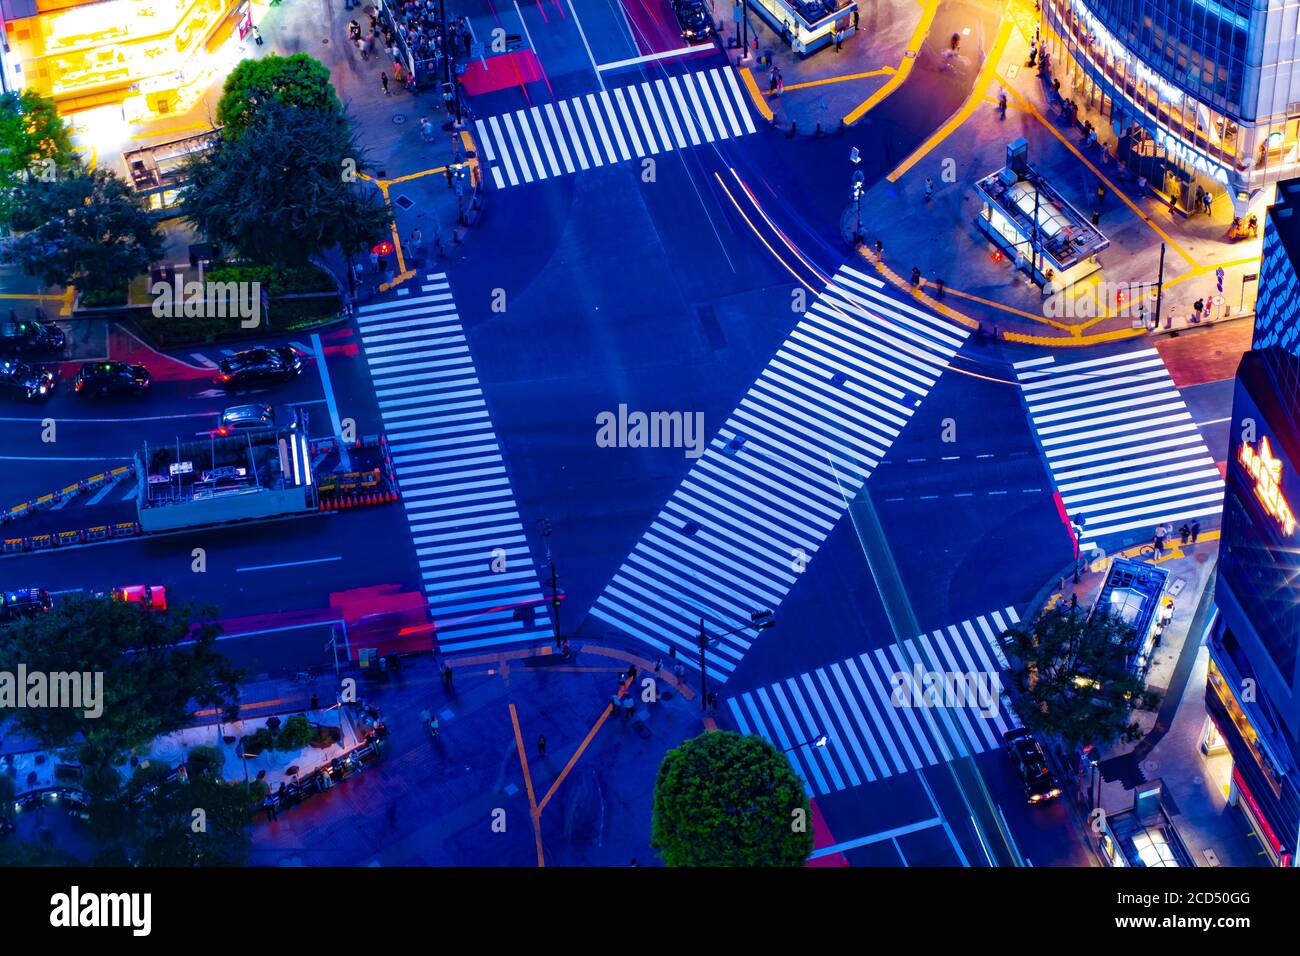 A night Shibuya crossing in Tokyo long shot high angle Stock Photo